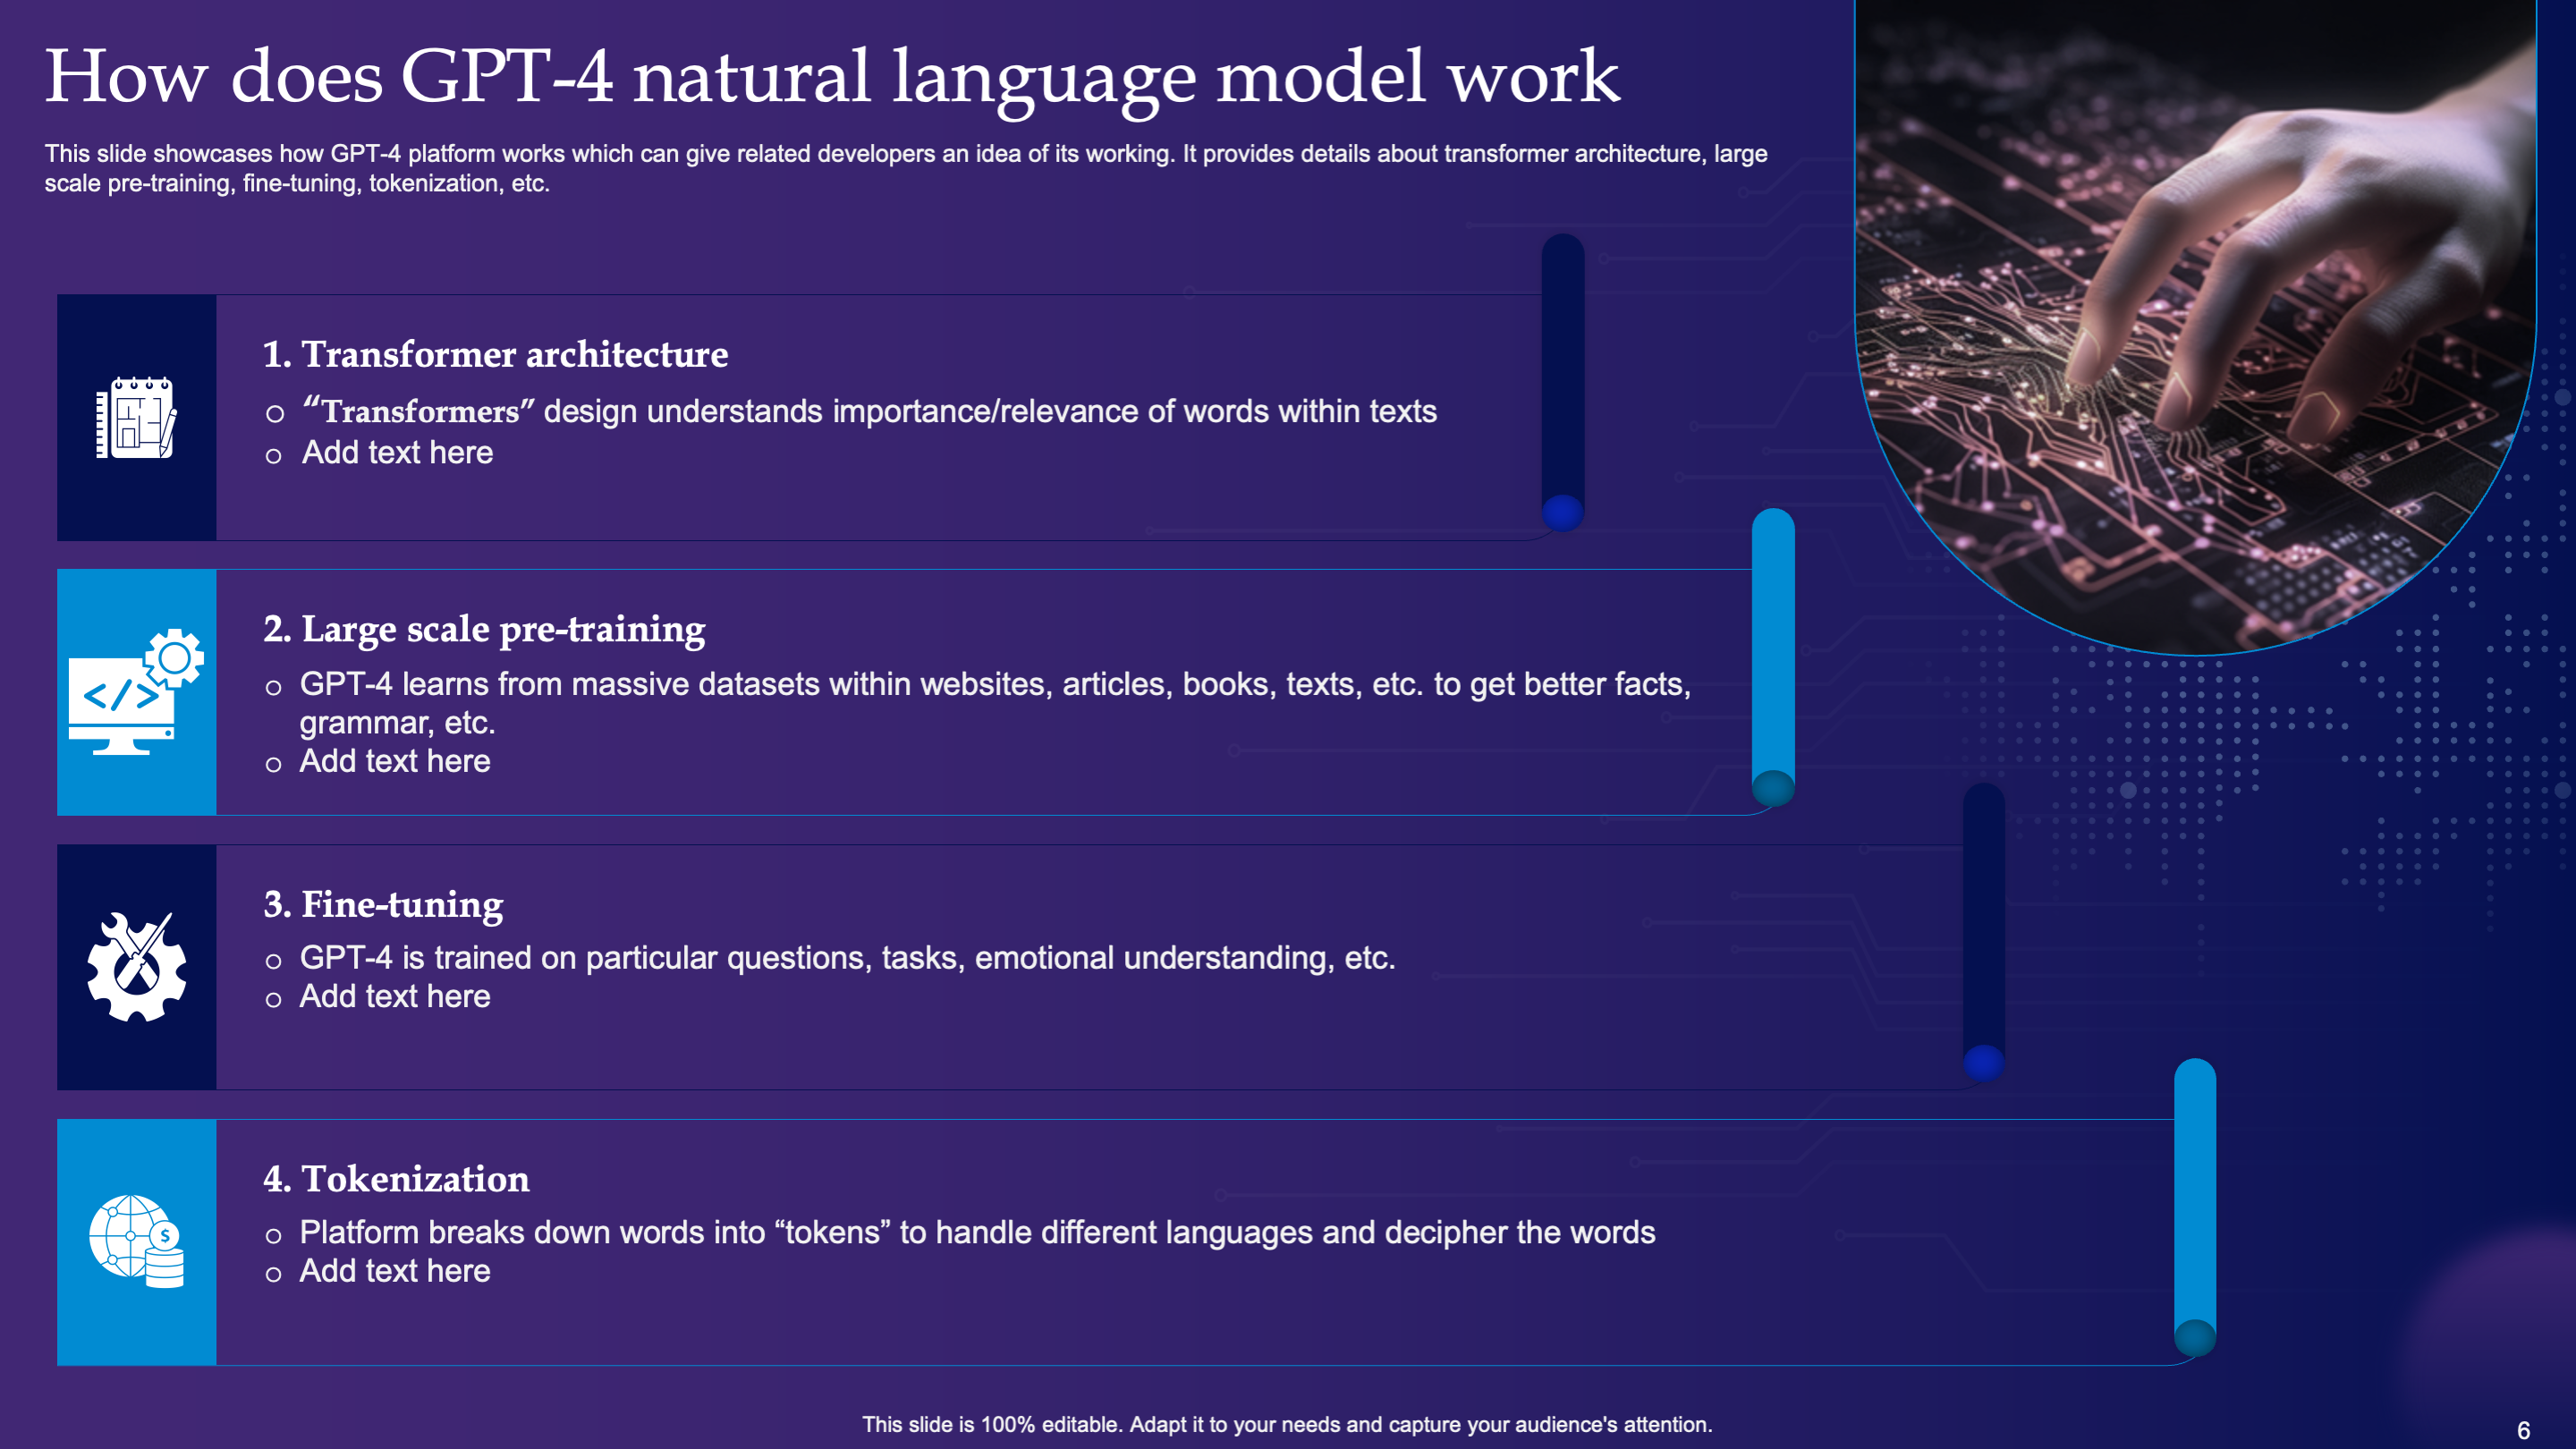 How does GPT-4 Natural Language Model Work?